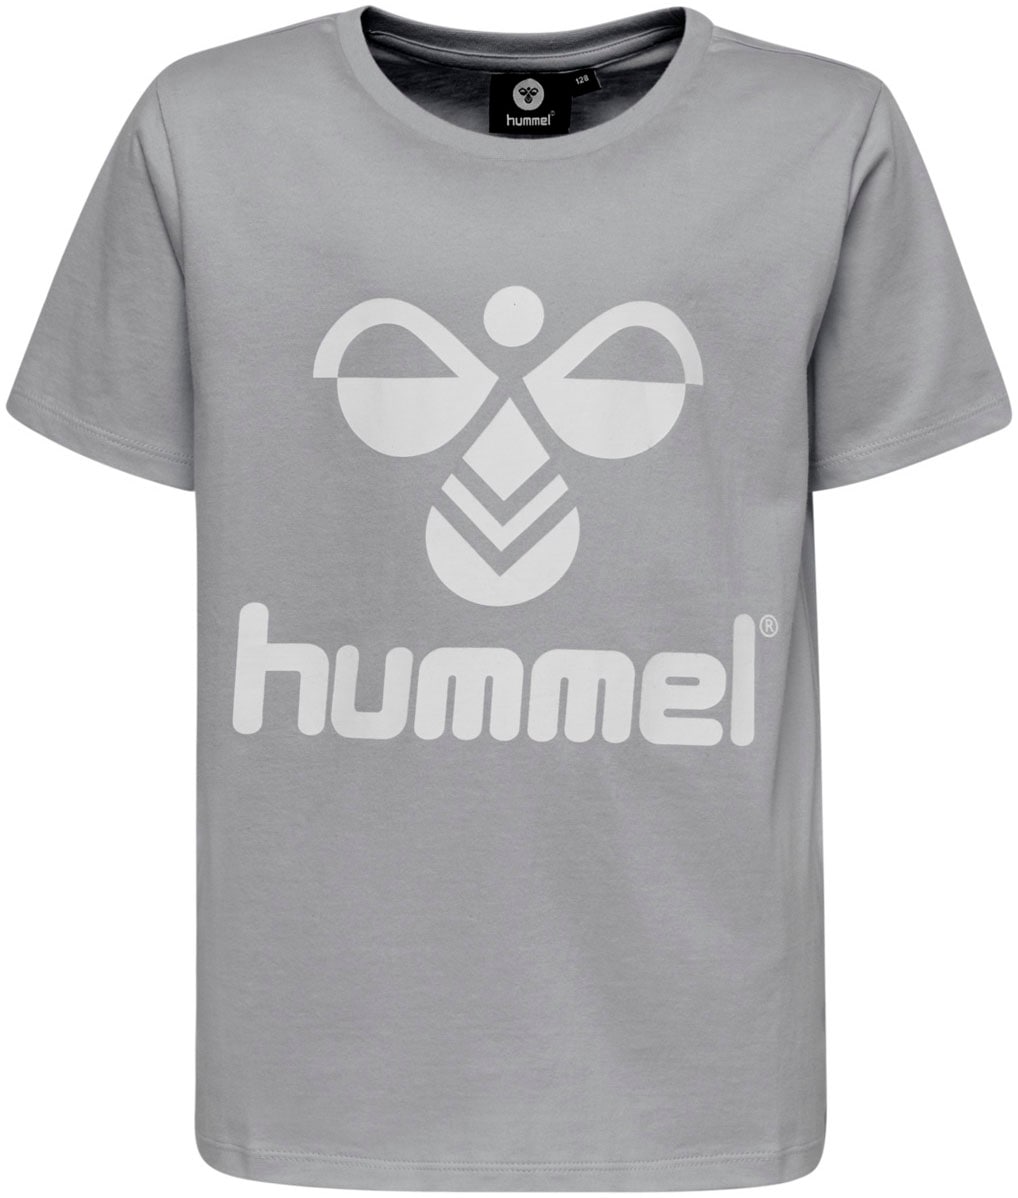 (1 hummel tlg.) Sleeve »HMLTRES Trouver Kinder«, - Short T-Shirt für T-SHIRT sur